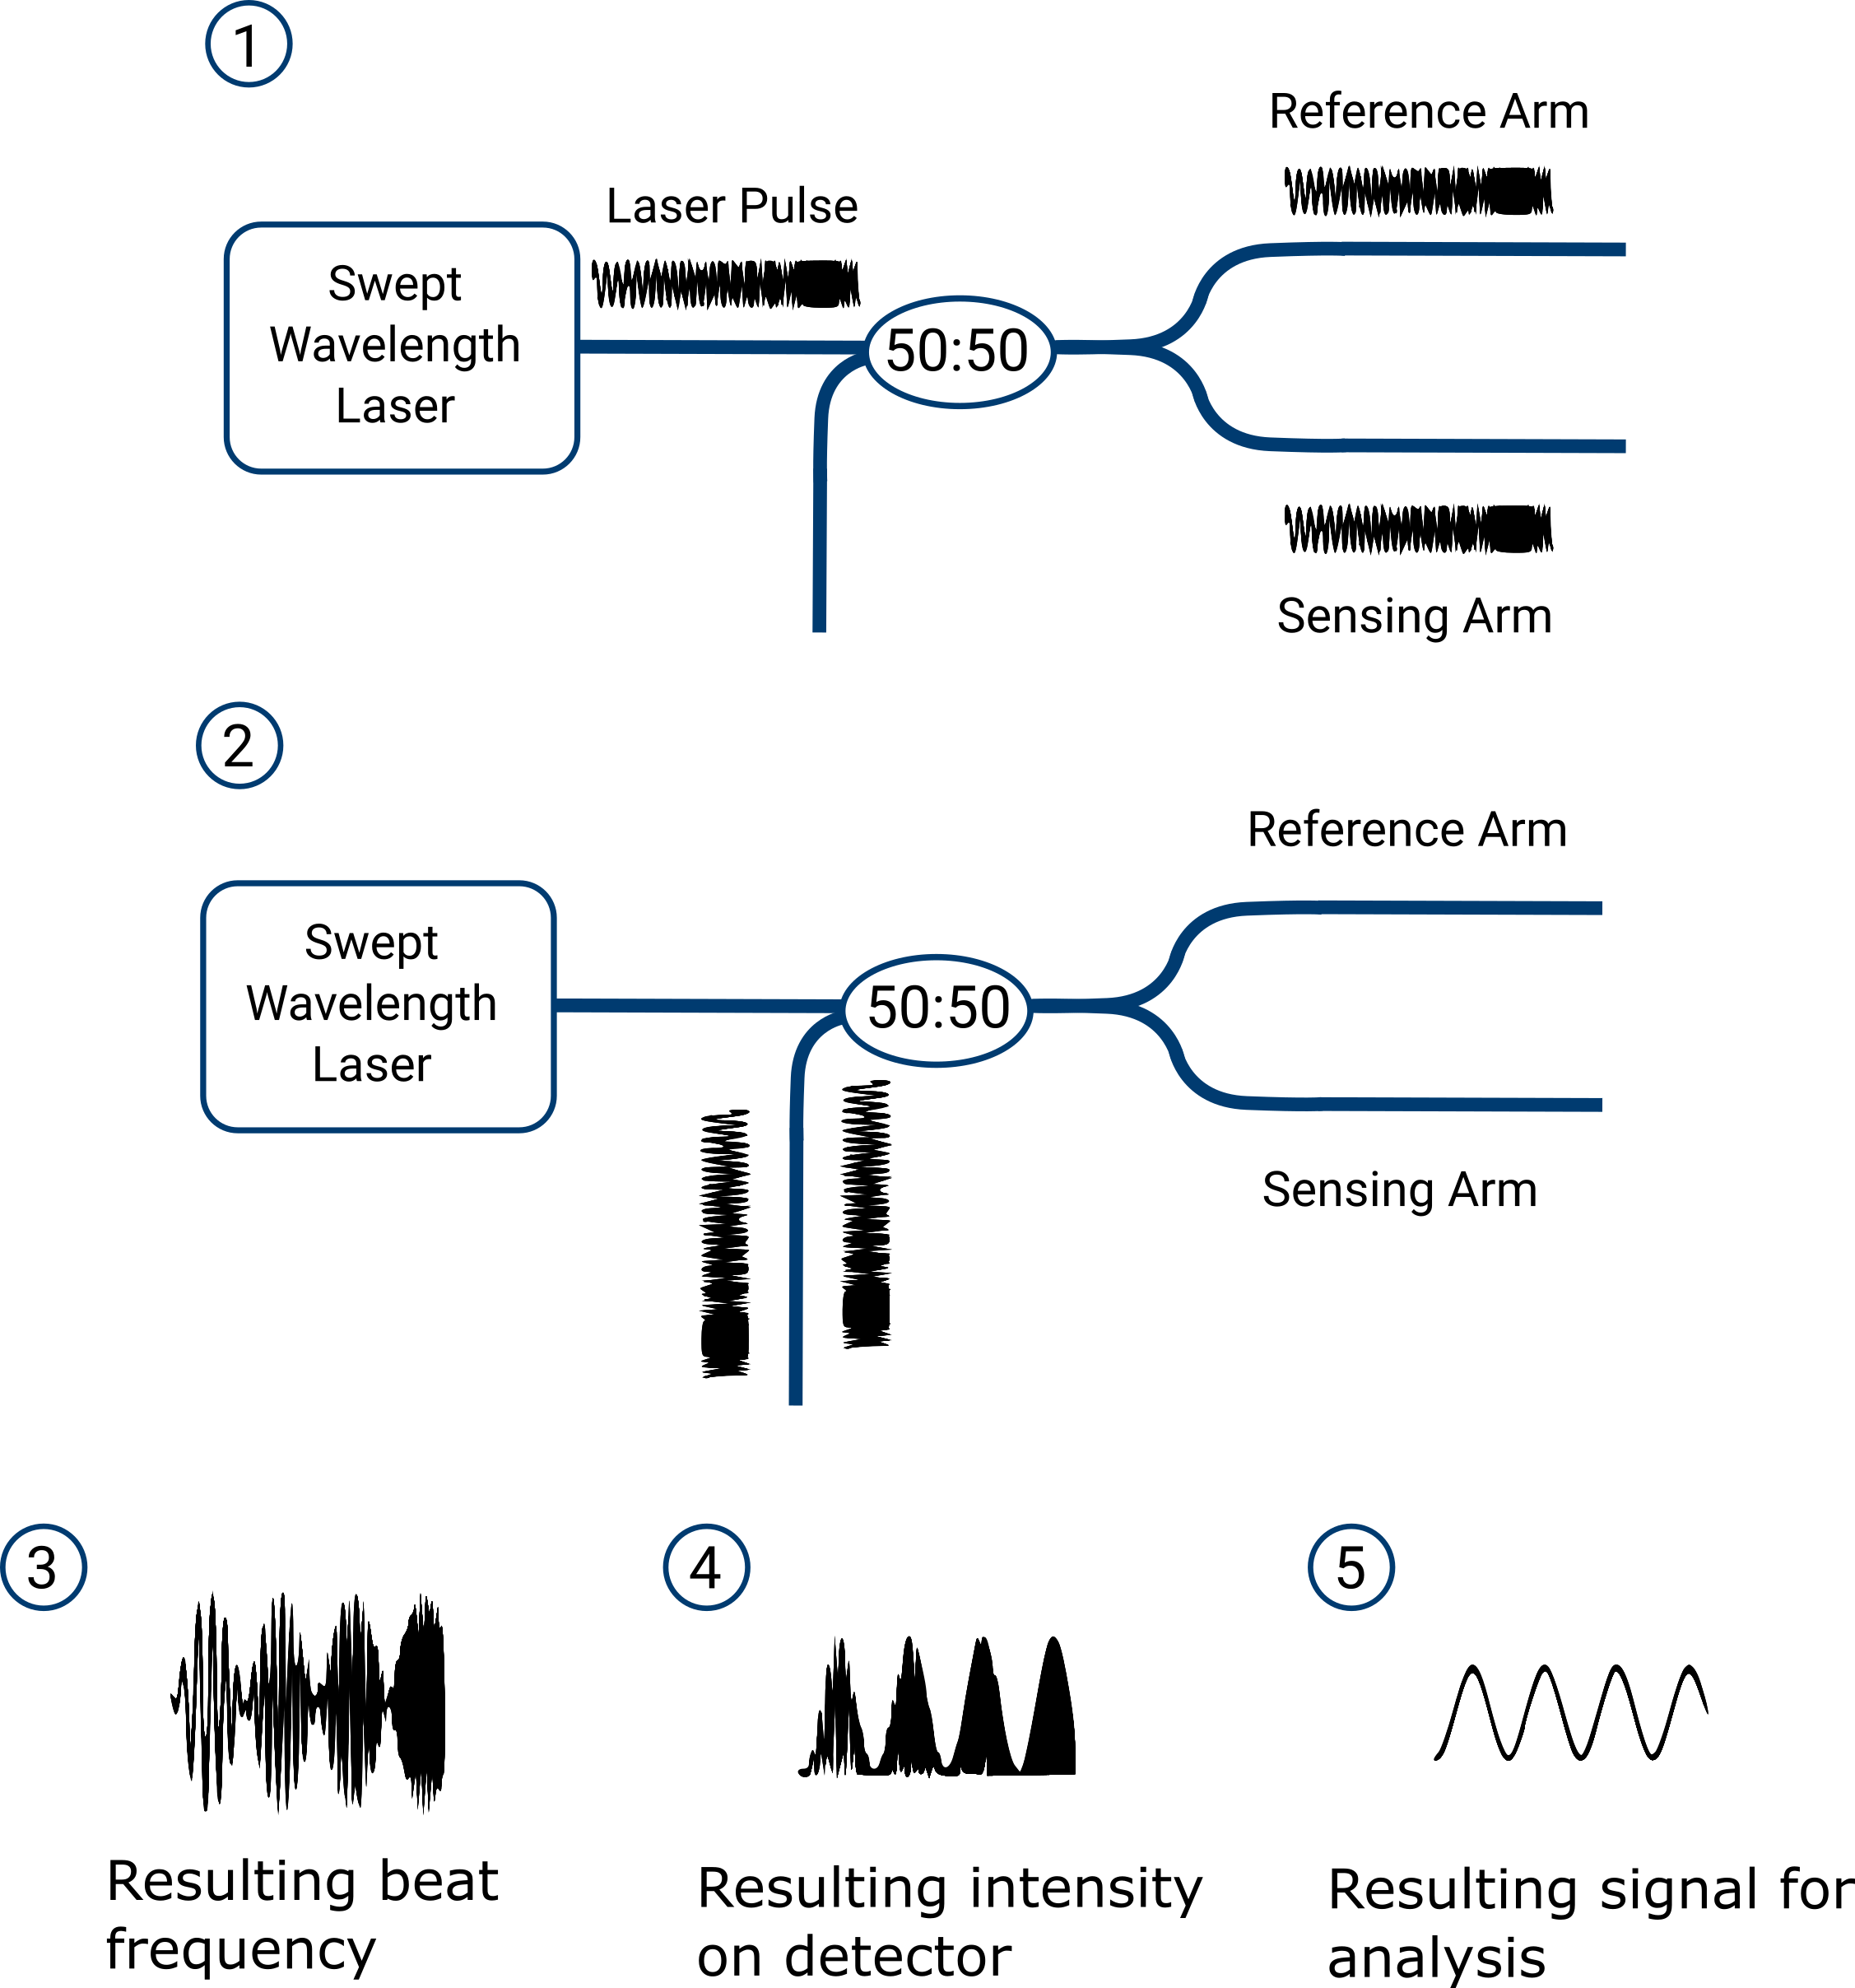 OFDR working principle diagram